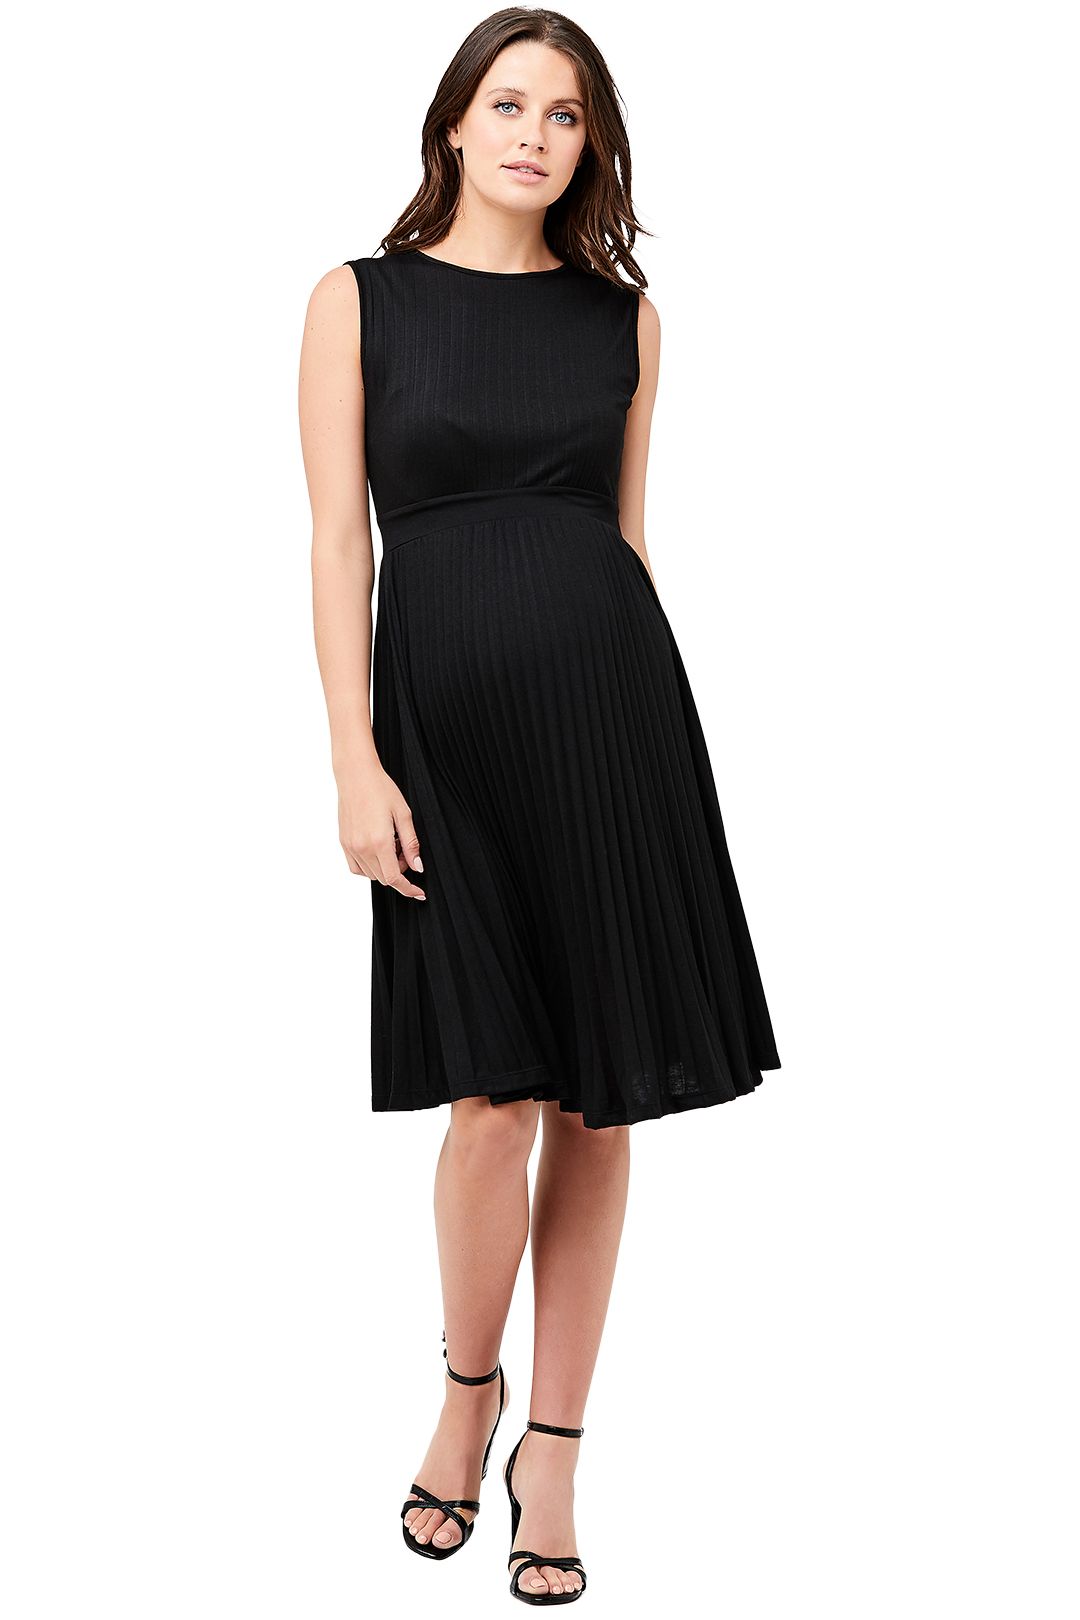 Ripe-Maternity-Knife-Pleat-Dress-Black-Front